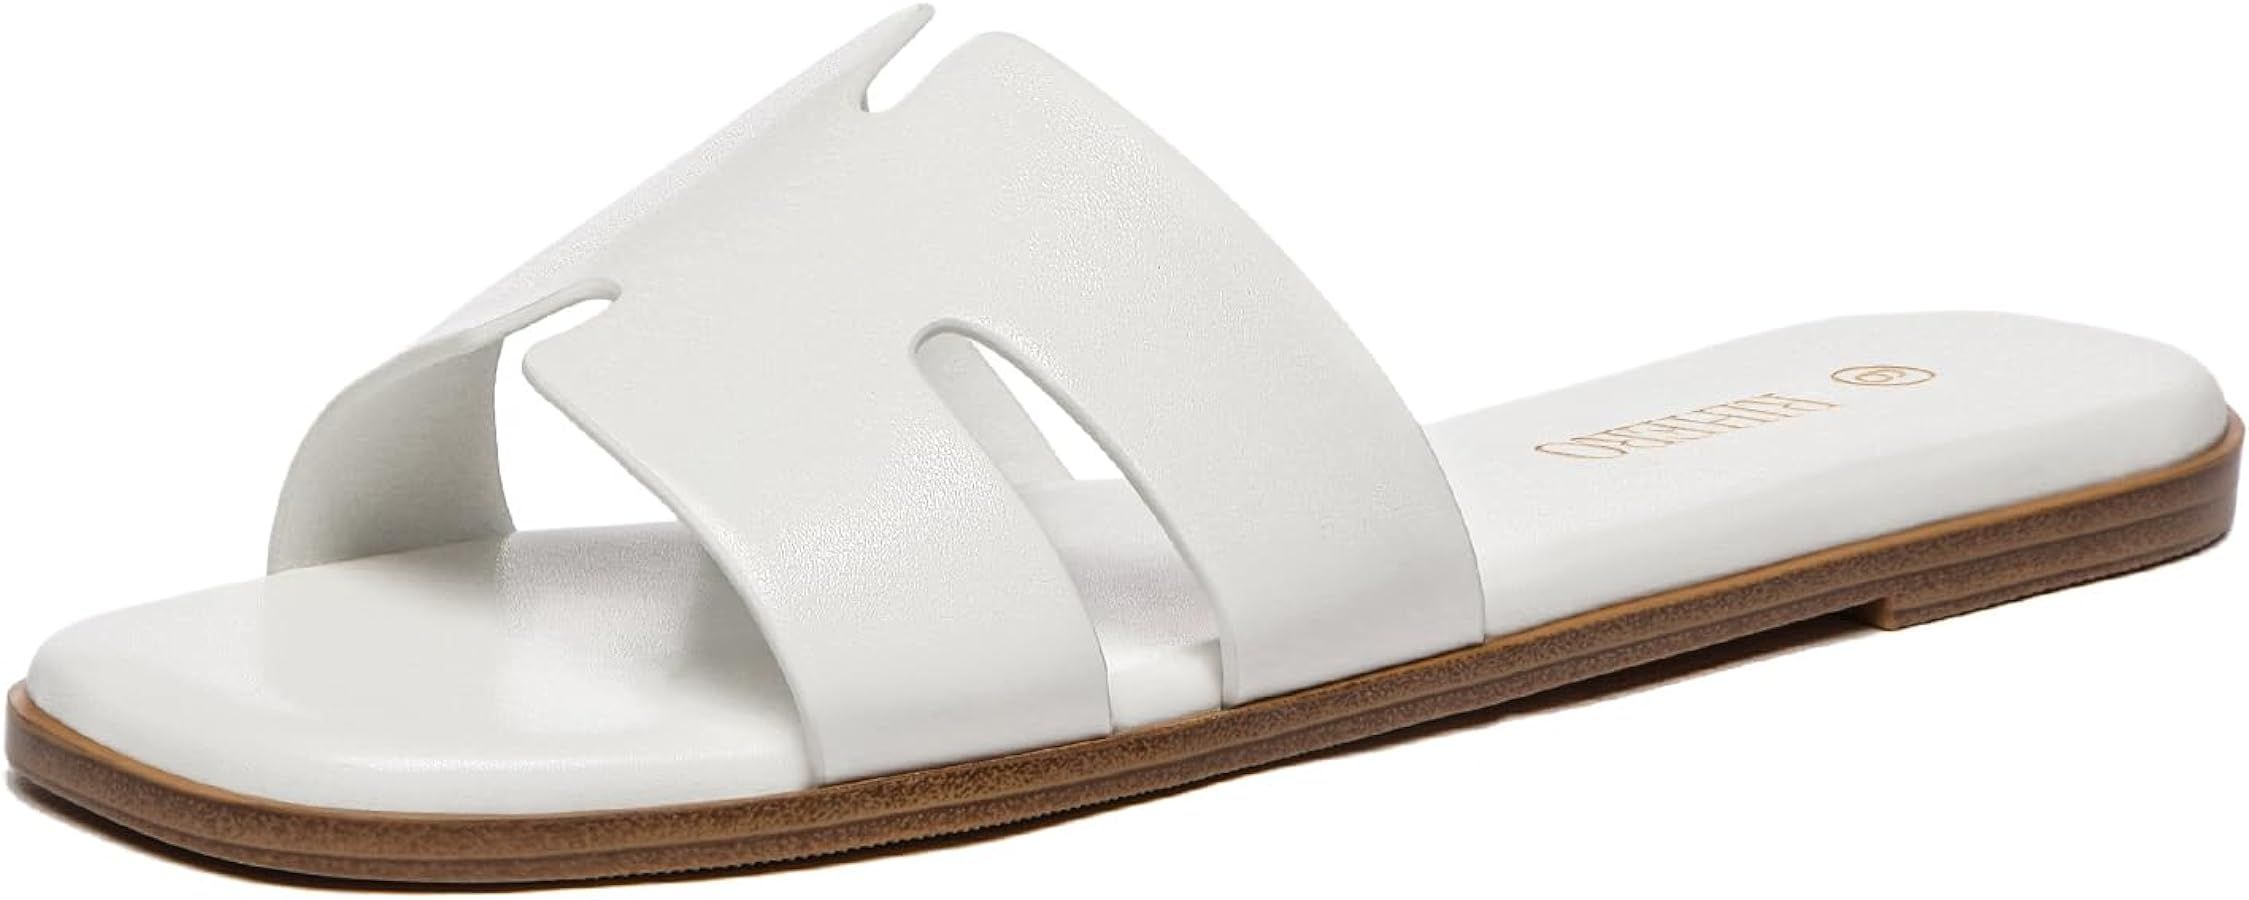 Women's Dressy Flat Sandals Comfortable Slip On Leather Slide Sandals | Amazon (US)